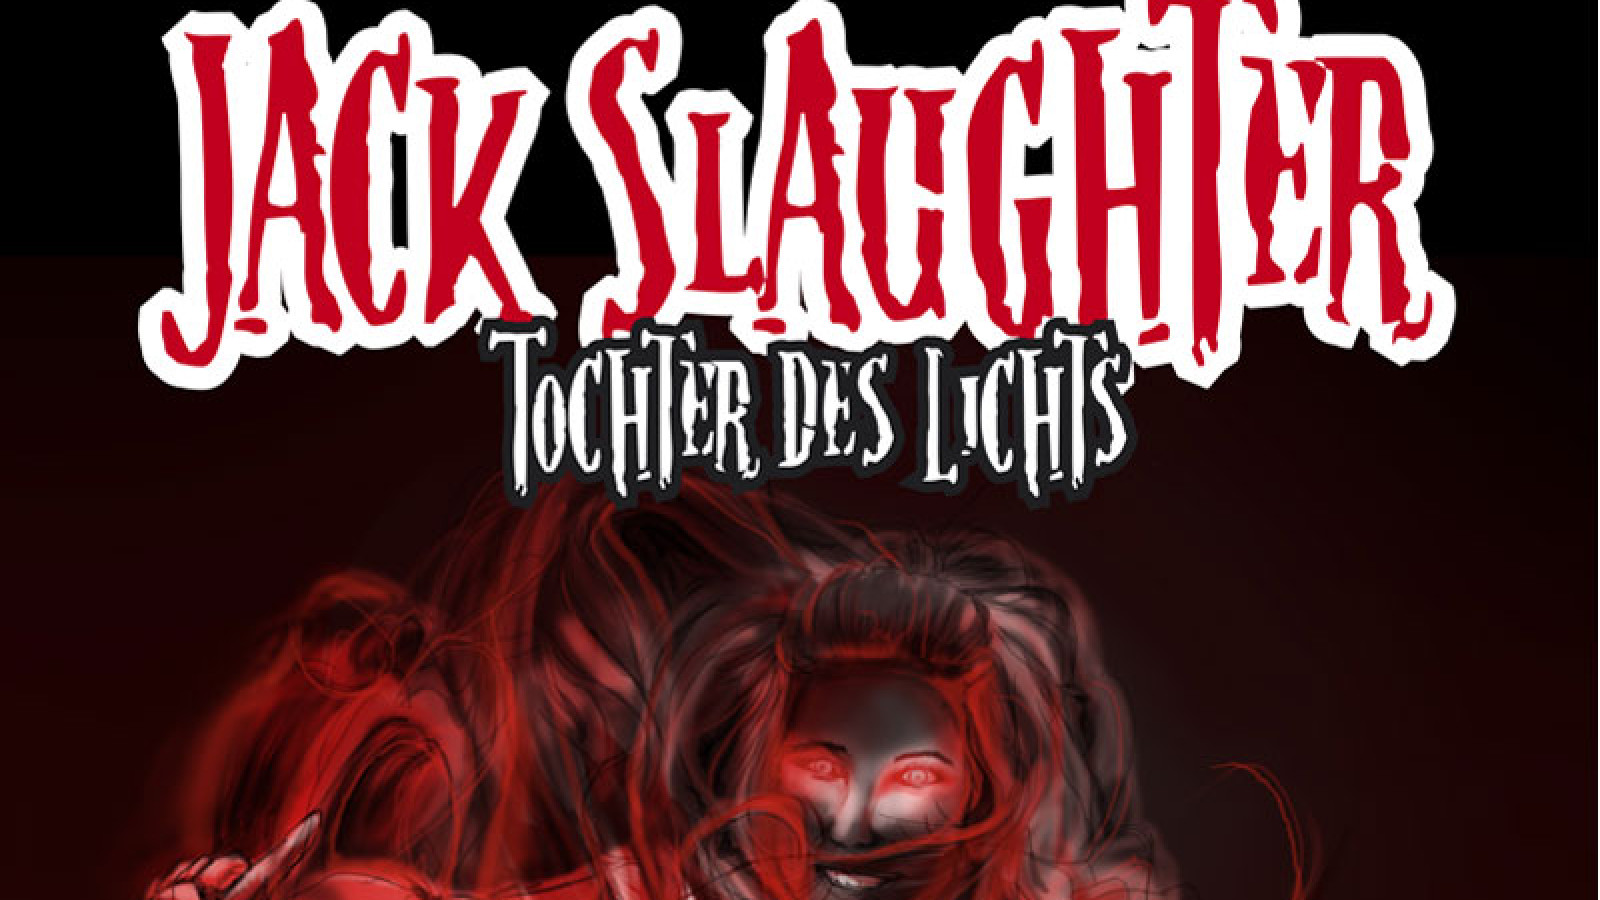 Jack Slaughter – Tochter des Lichts: Das 3. E-Book "Geisterjäger in Not" erscheint am 24. April 2015